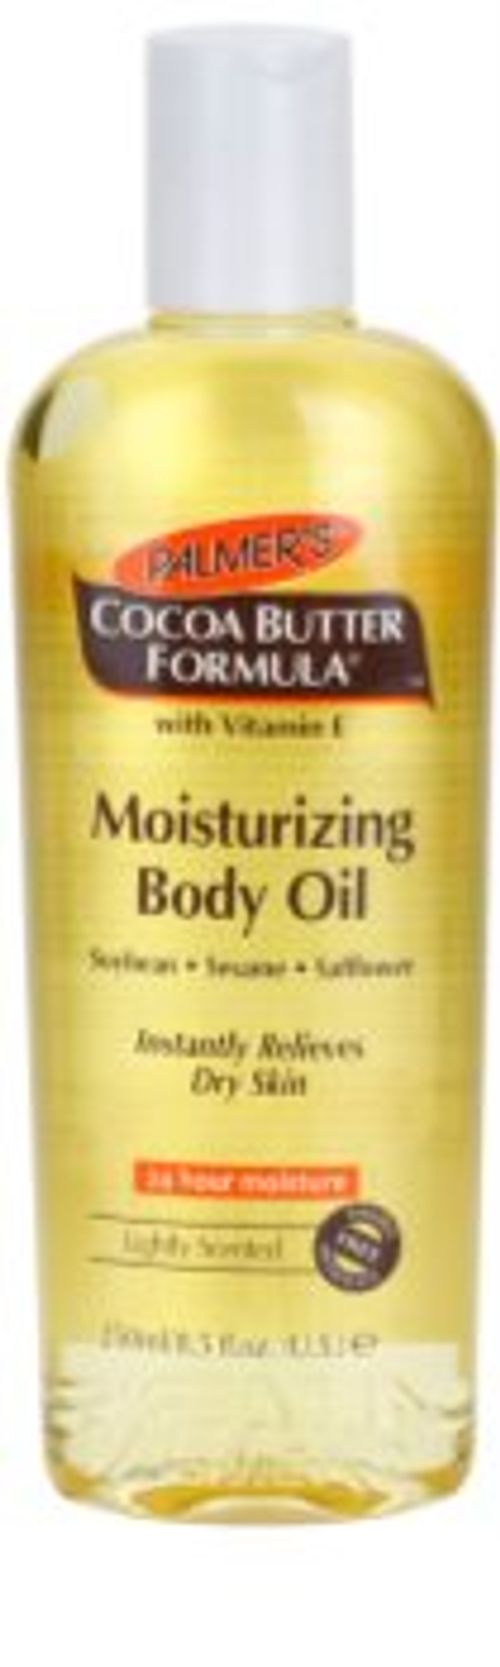 Palmer's Hand & Body Cocoa Butter Formula Moisturizing Body Oil For Dry Skin